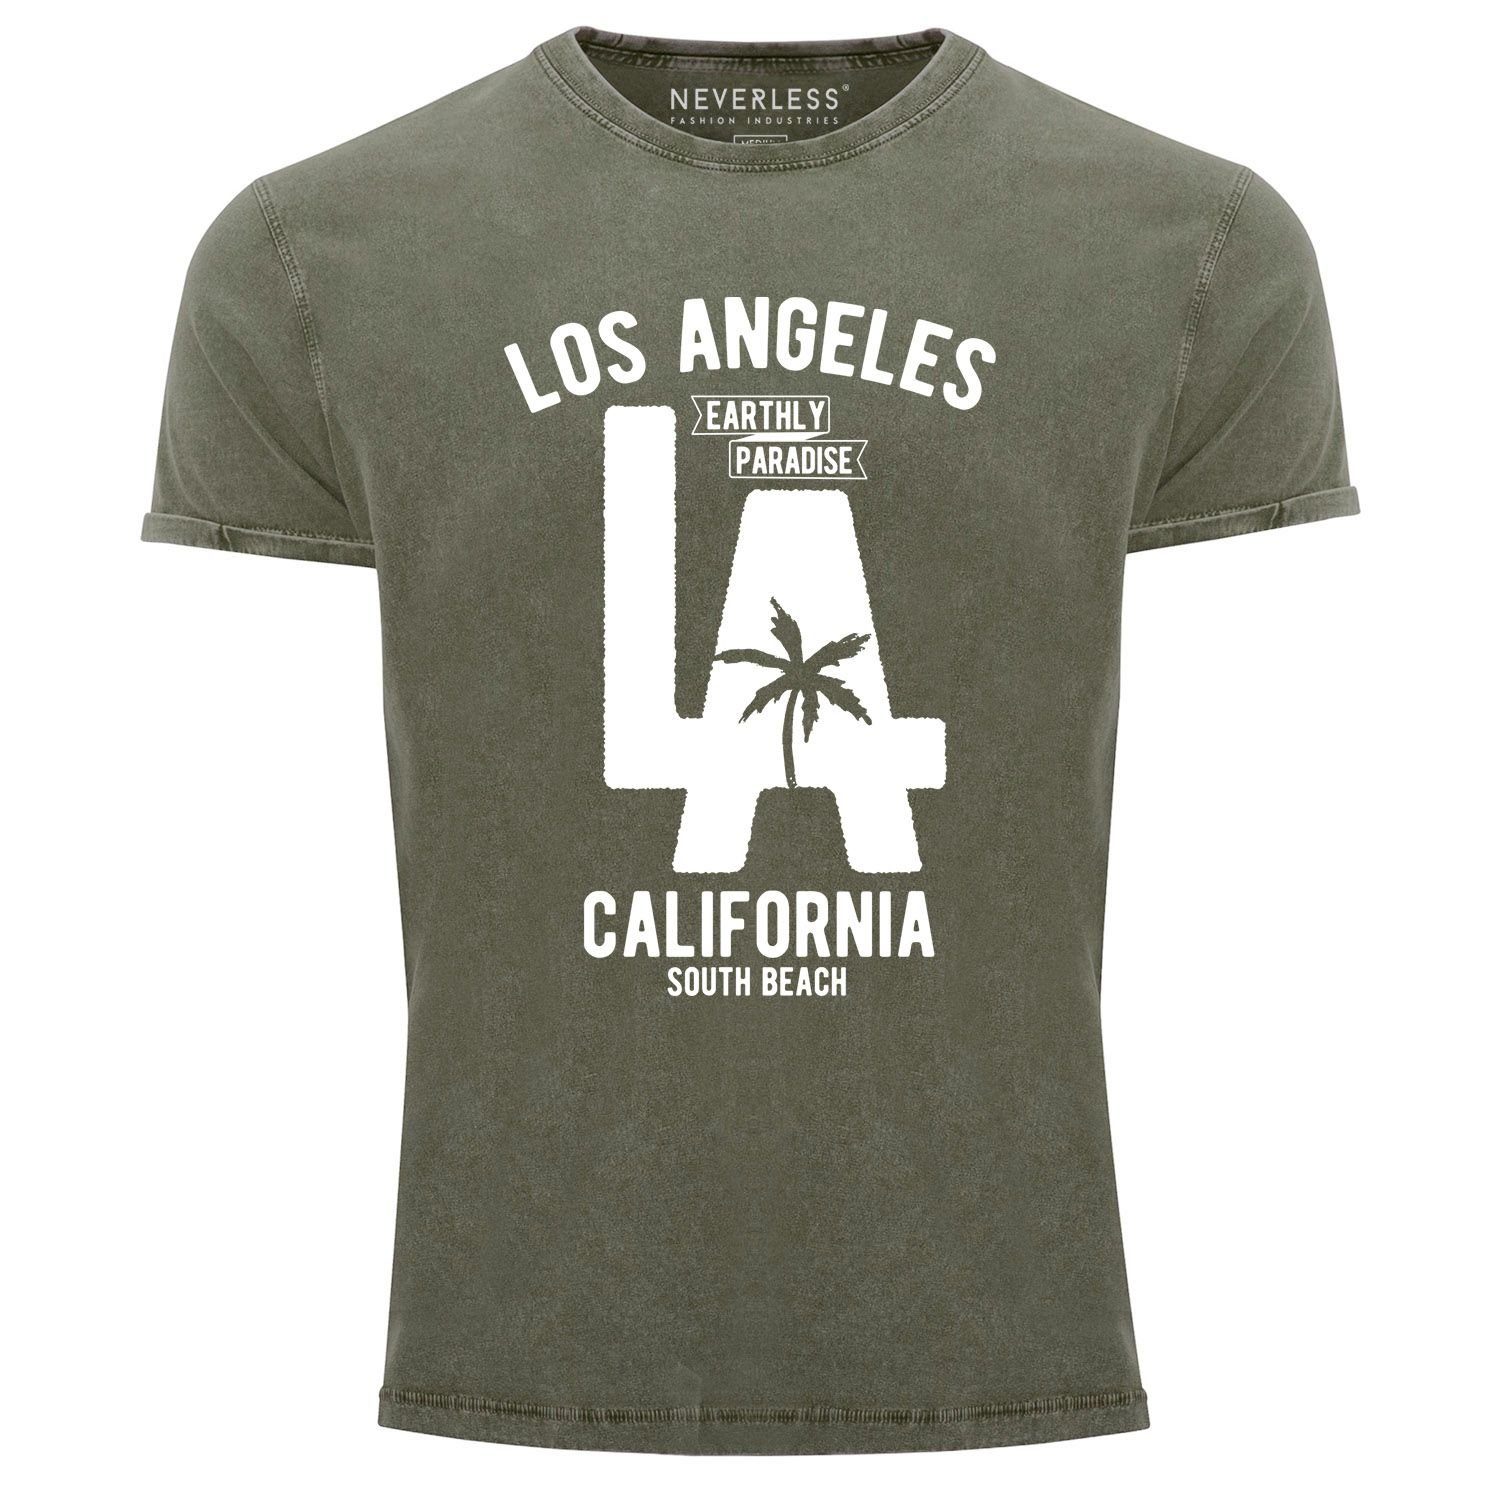 Neverless Print-Shirt Cooles Angesagtes Herren T-Shirt Vintage Shirt LA Los Angeles California Aufdruck Used Look Slim Fit Neverless® mit Print oliv